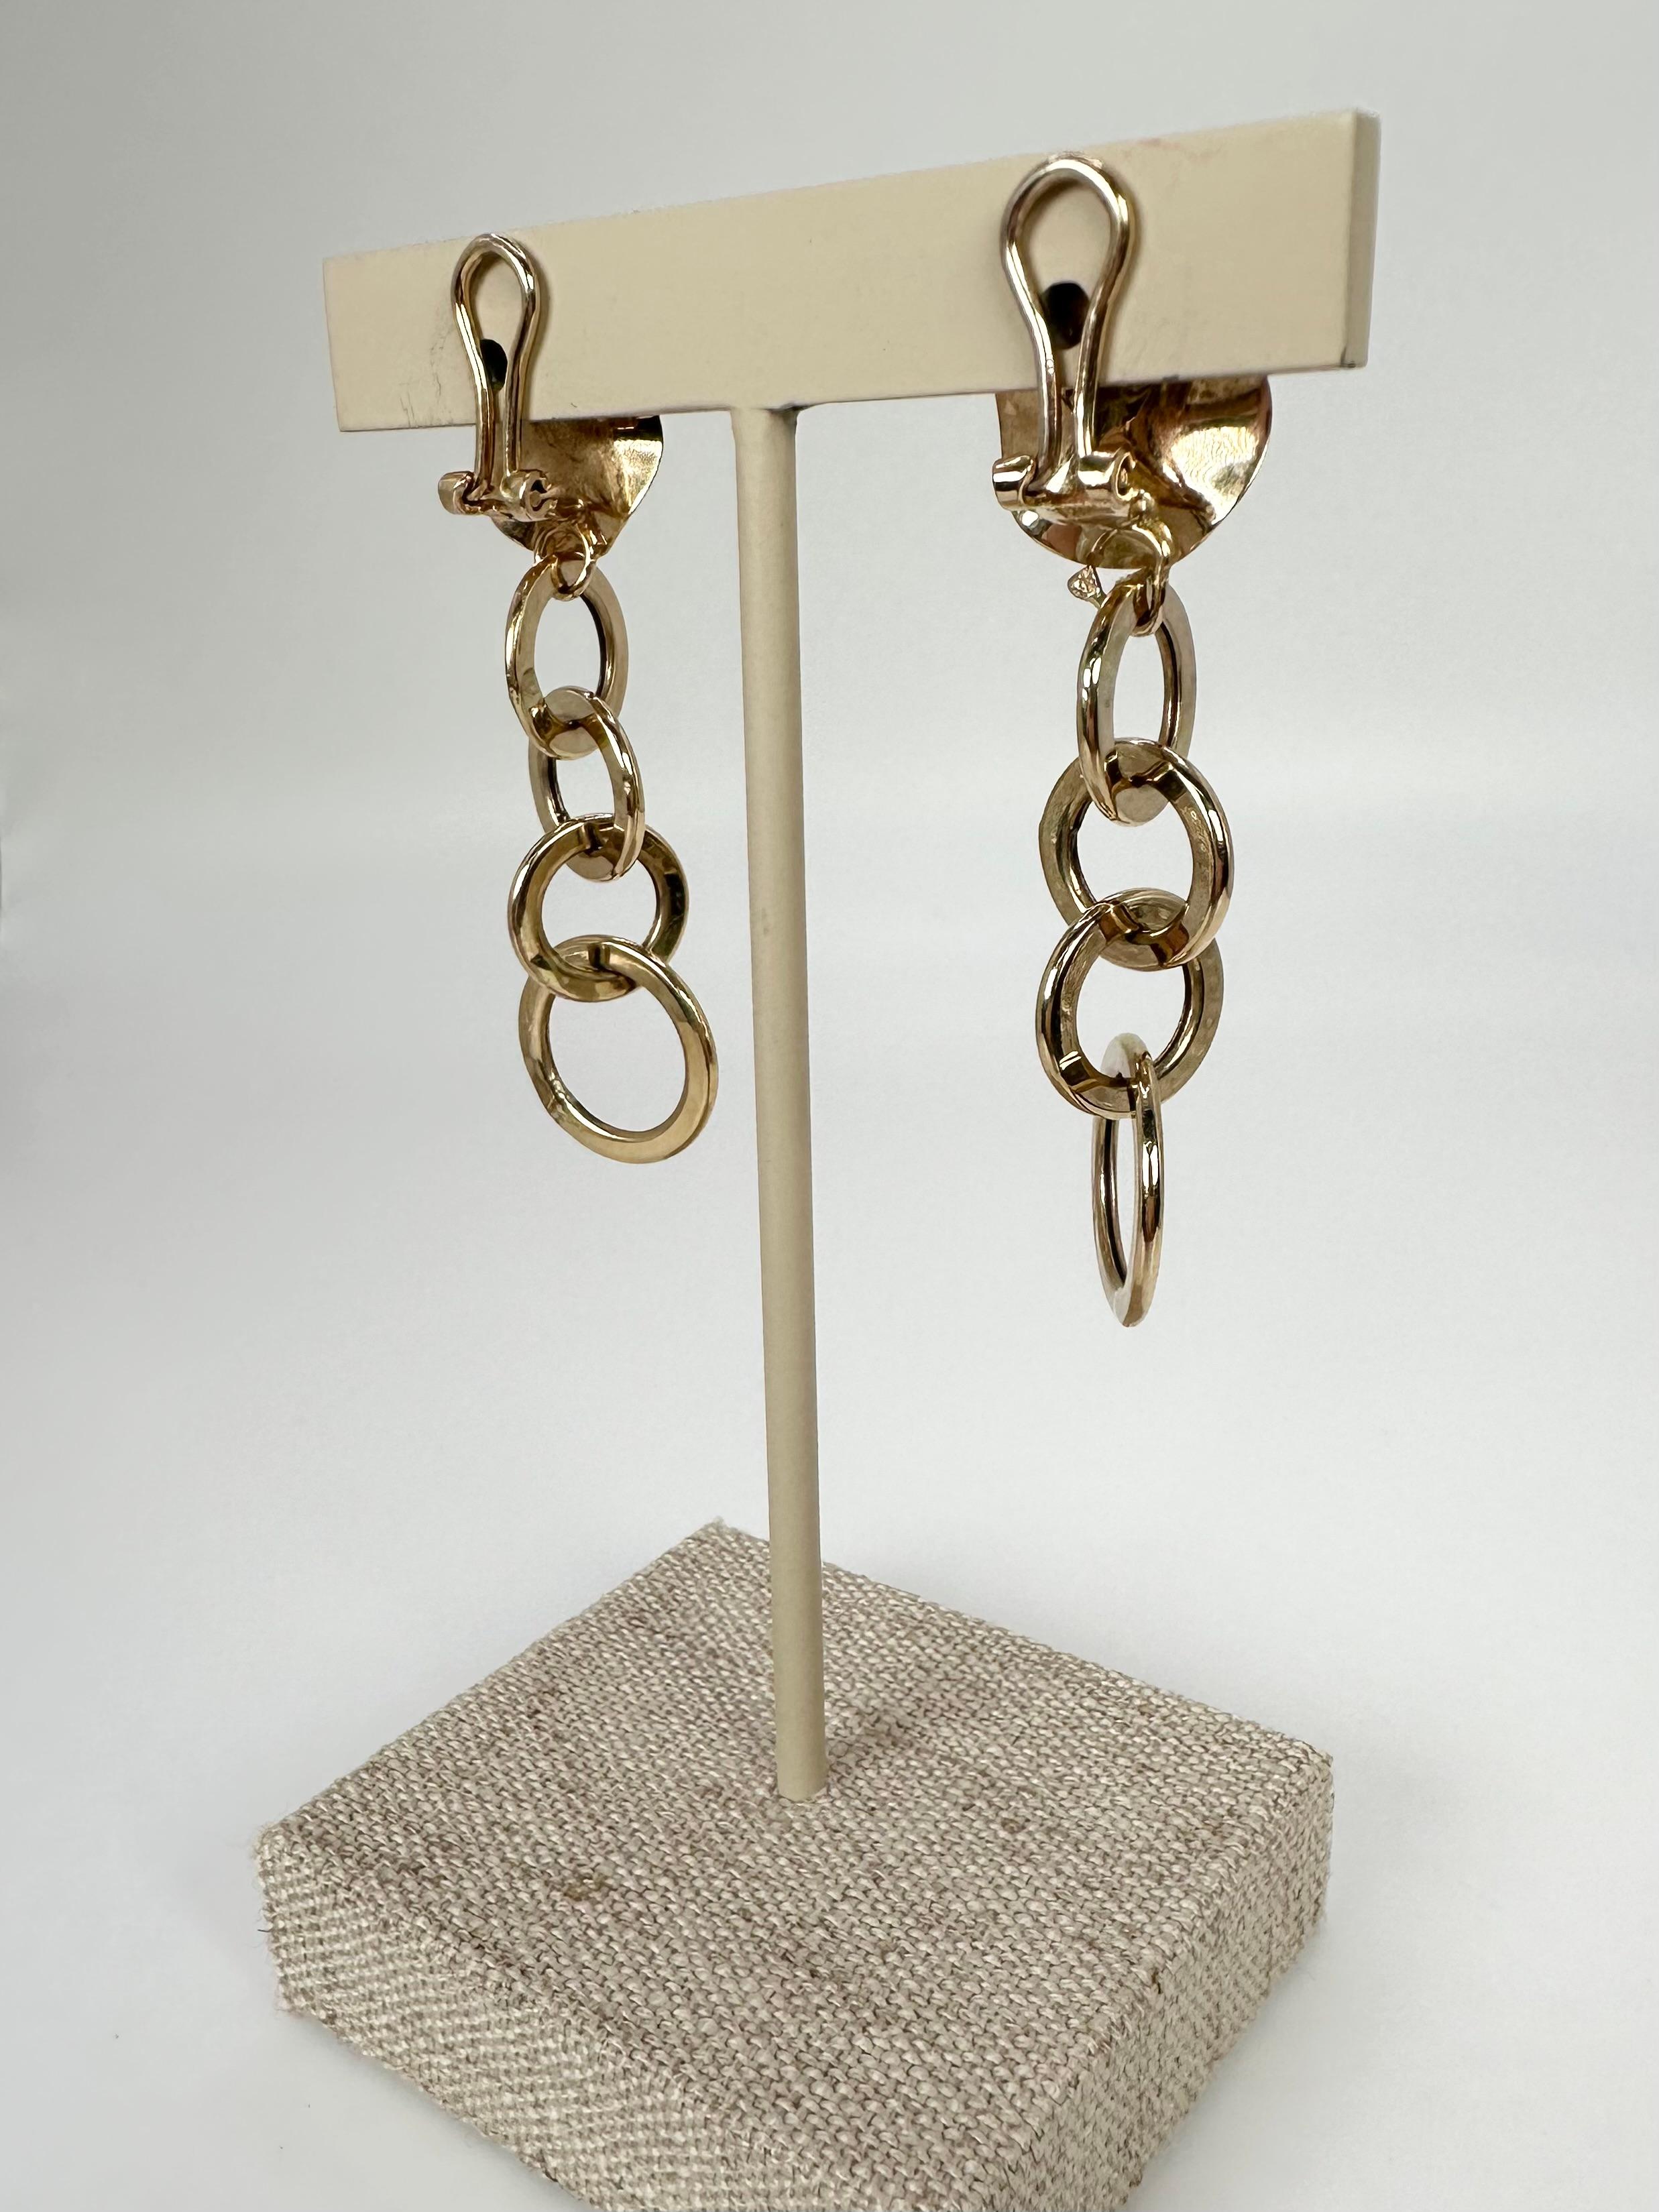 Floral Gold Earrings Long Dangling Earrings 14 Karat In New Condition For Sale In Jupiter, FL